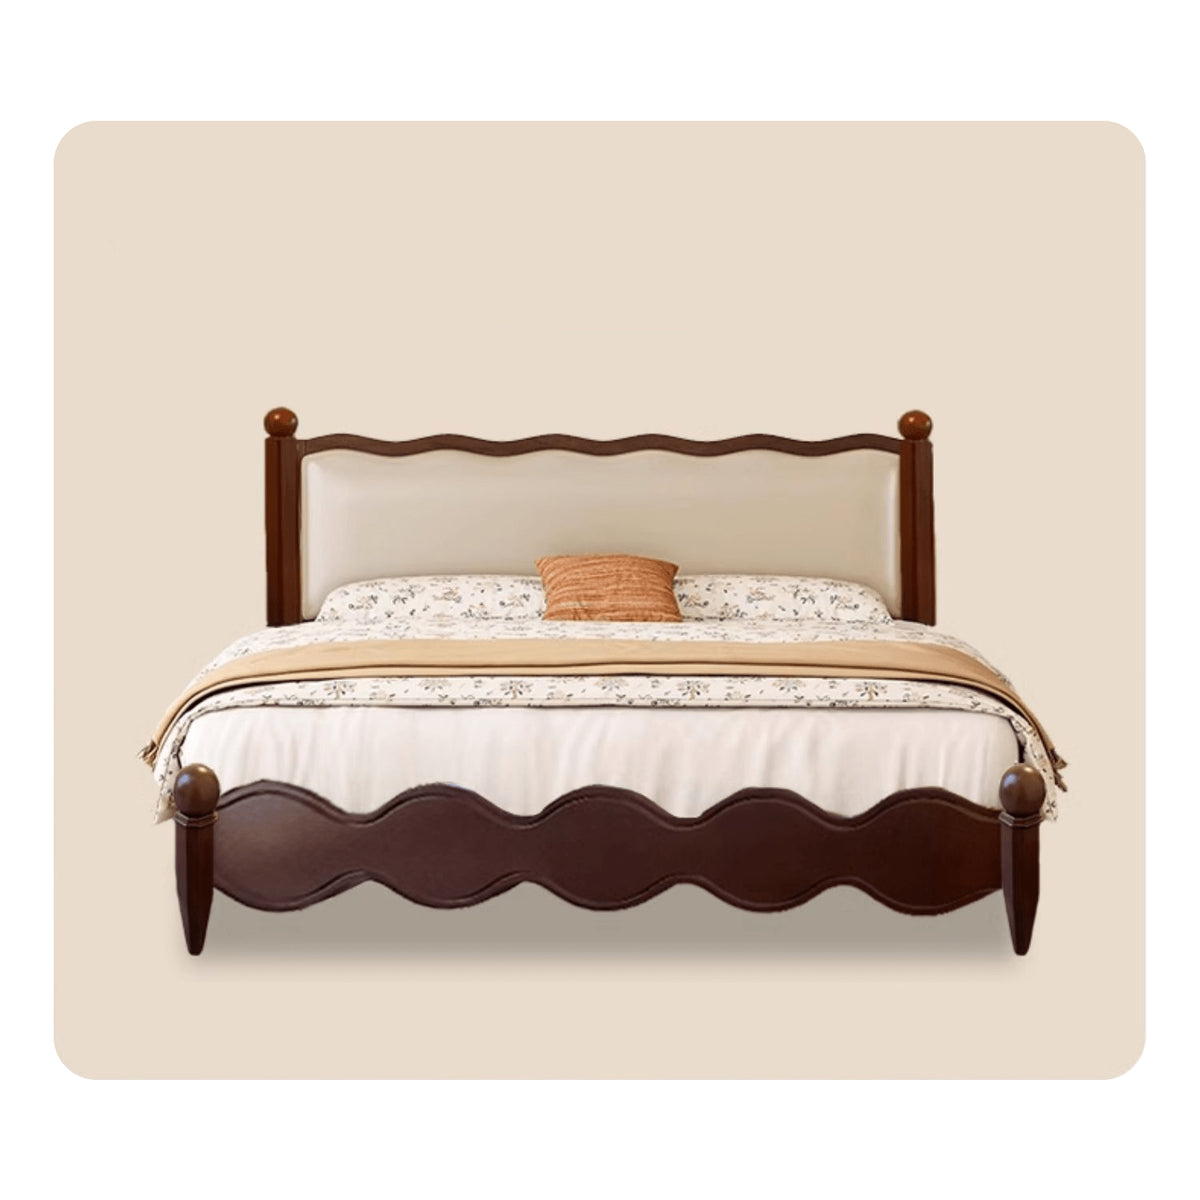 Luxury Brown Walnut Bedside Cupboard - Elegant Nightstand Storage Solution yw-206